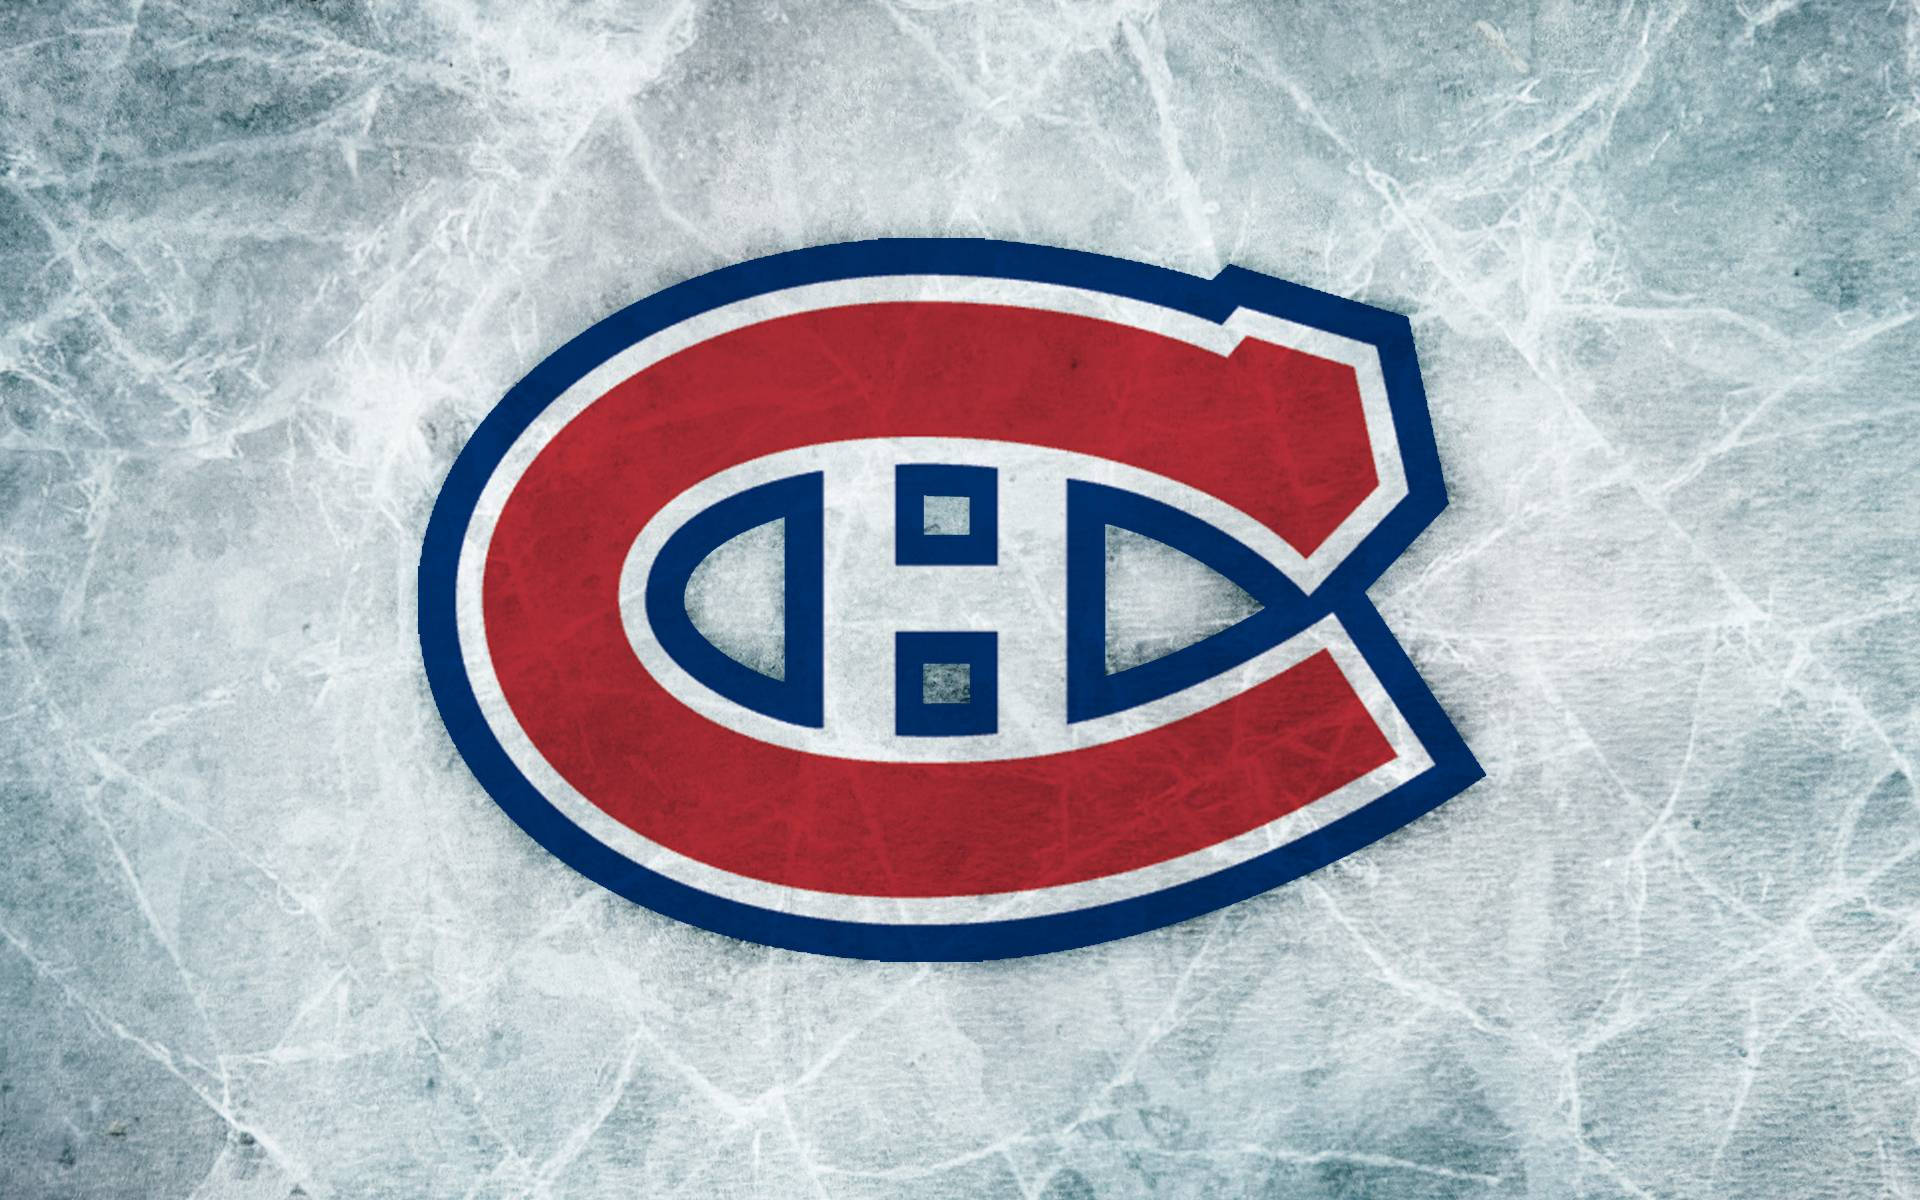 Montreal Canadiens Ice Hockey Team Background